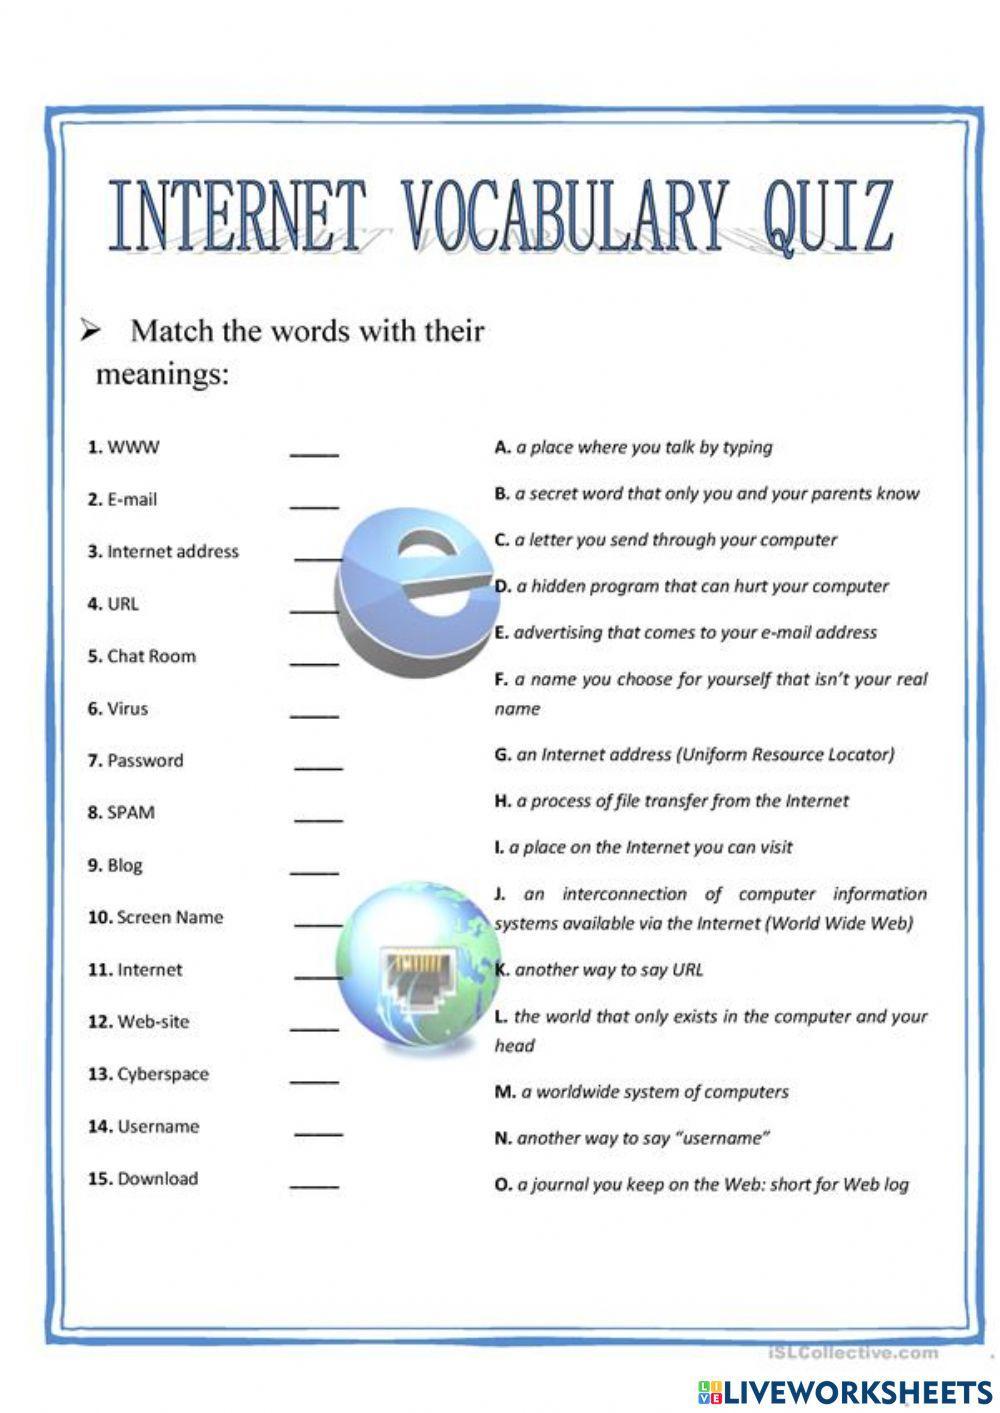 Internet Vocabulary Quiz